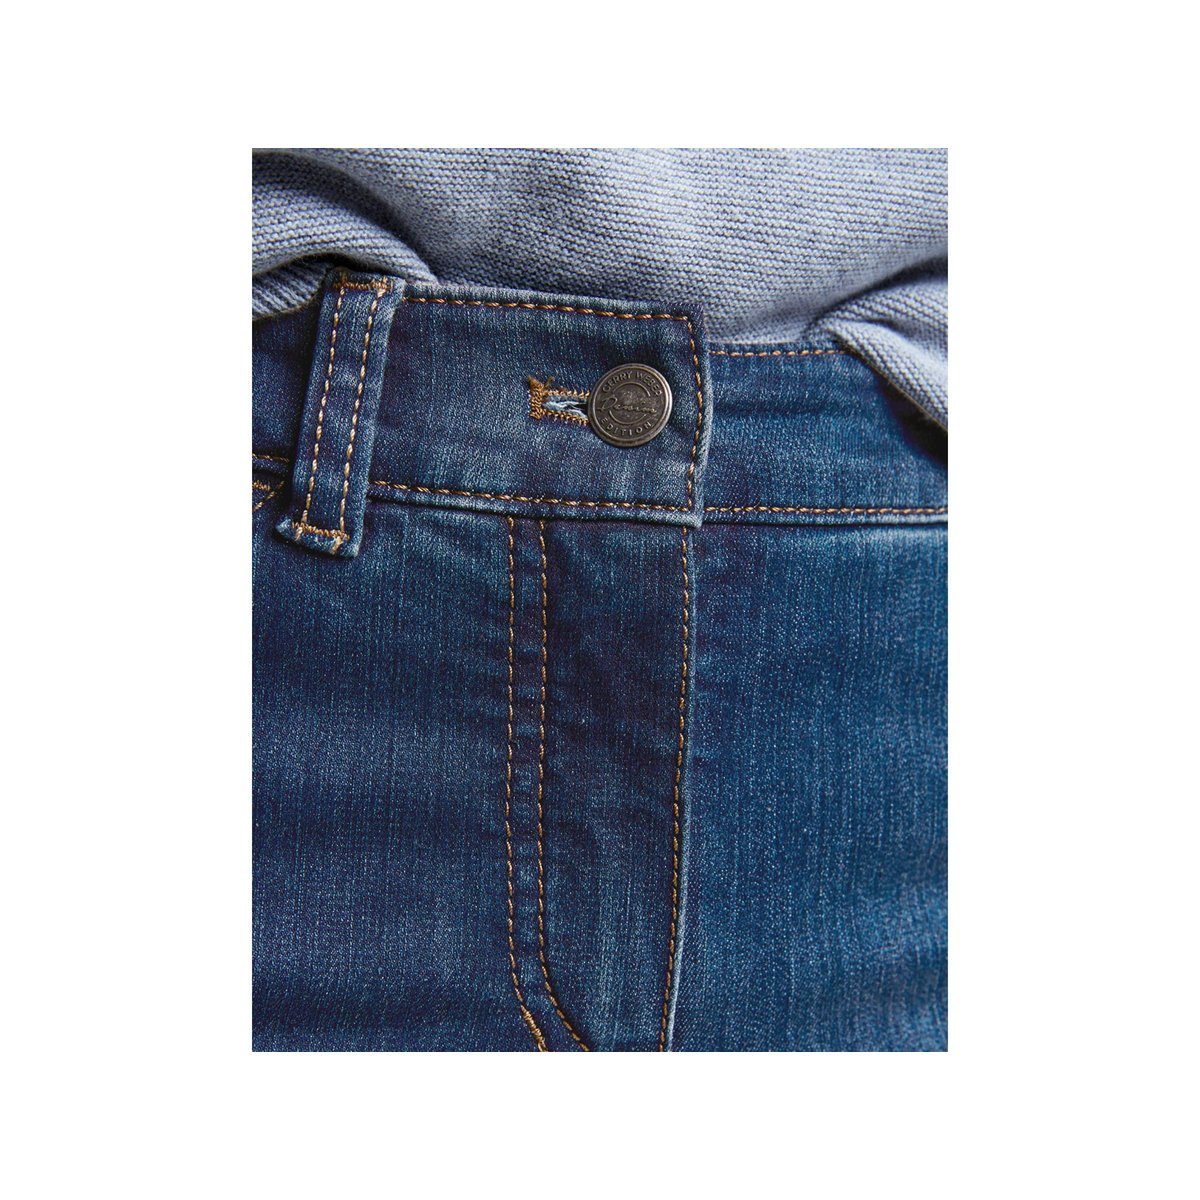 GERRY WEBER Straight-Jeans dunkel-blau denim dark regular mit usee (862002) (1-tlg) blue